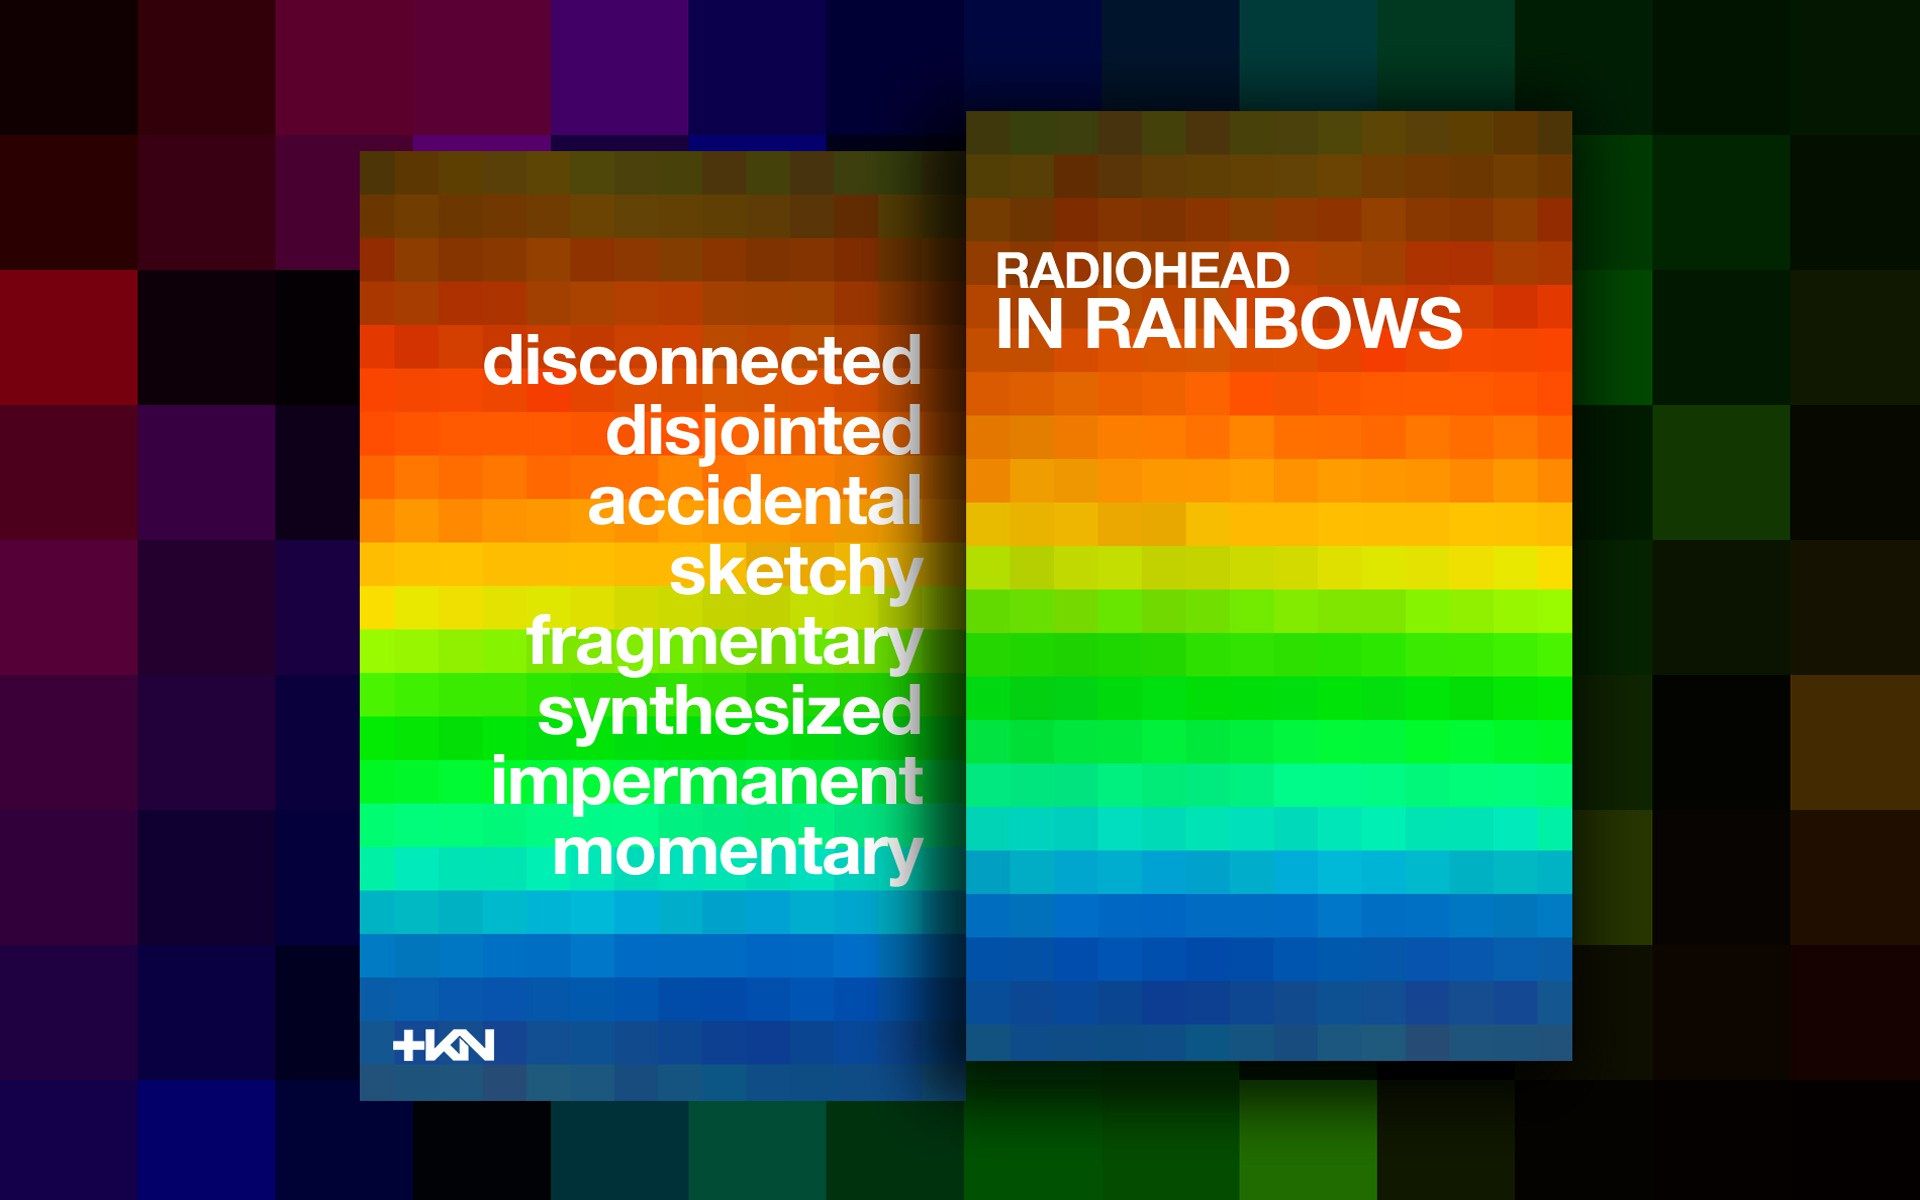 Radiohead Countdown Wallpaper: #7 of 7 In Rainbows | The Fox Is Black